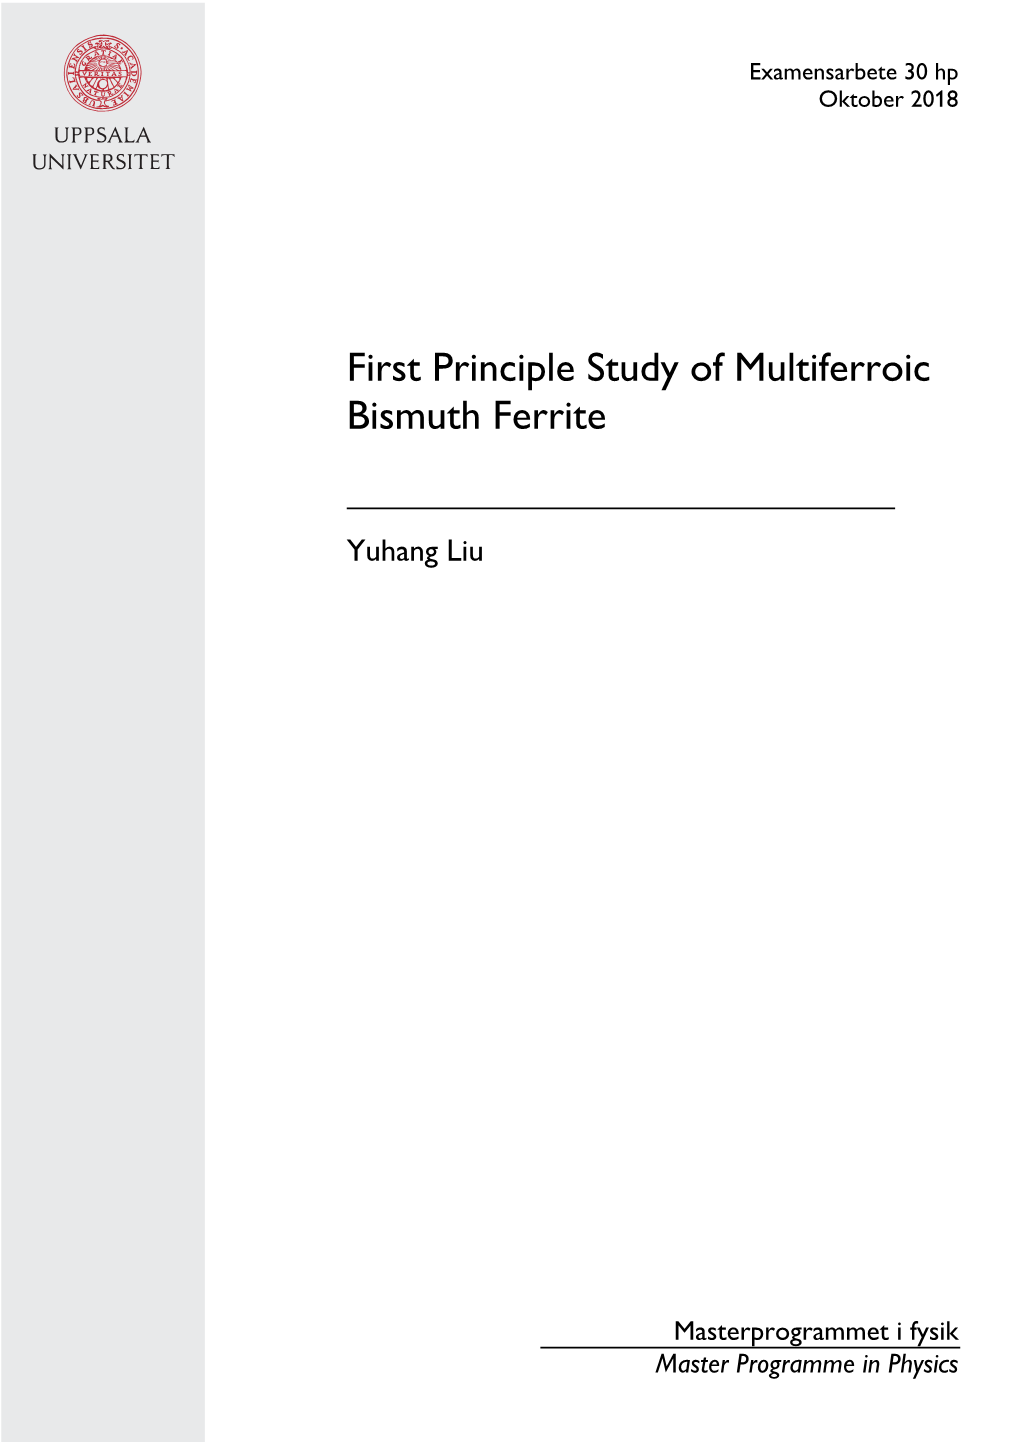 First Principle Study of Multiferroic Bismuth Ferrite